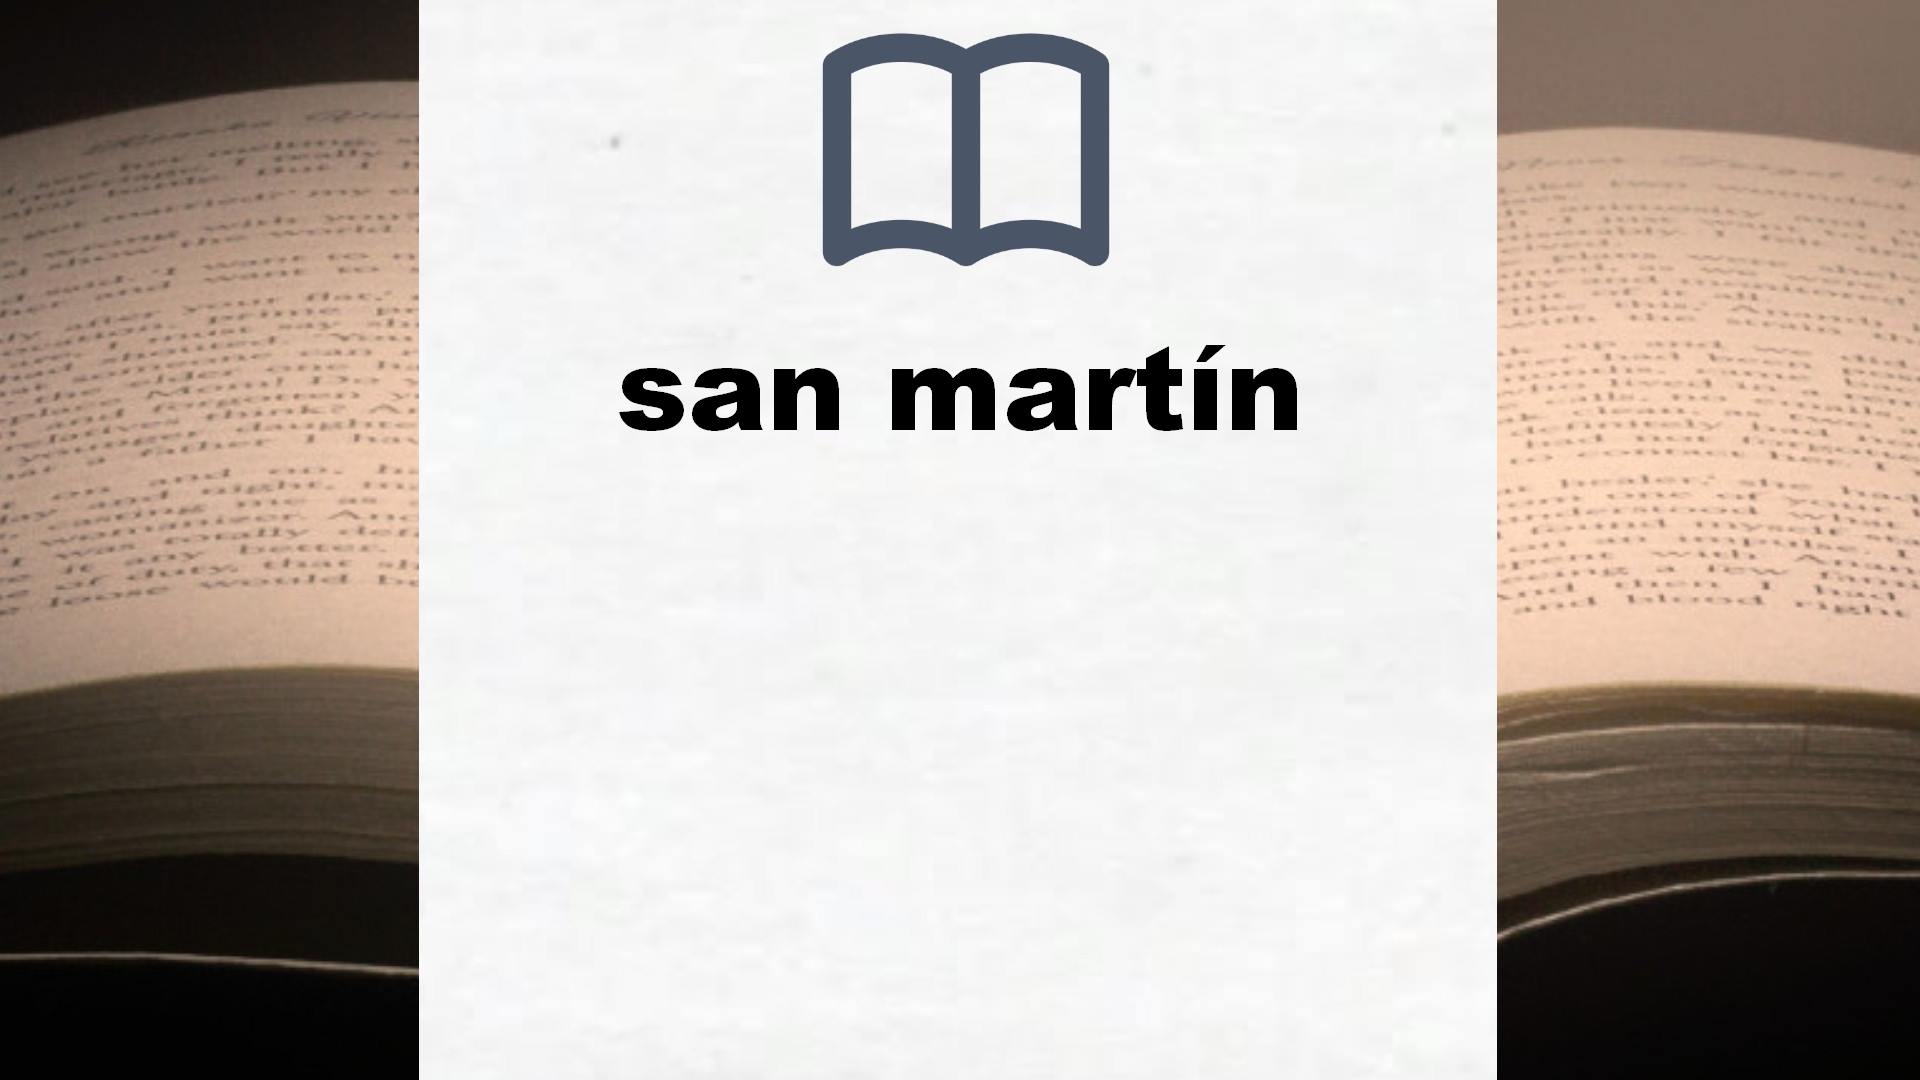 Libros sobre san martín